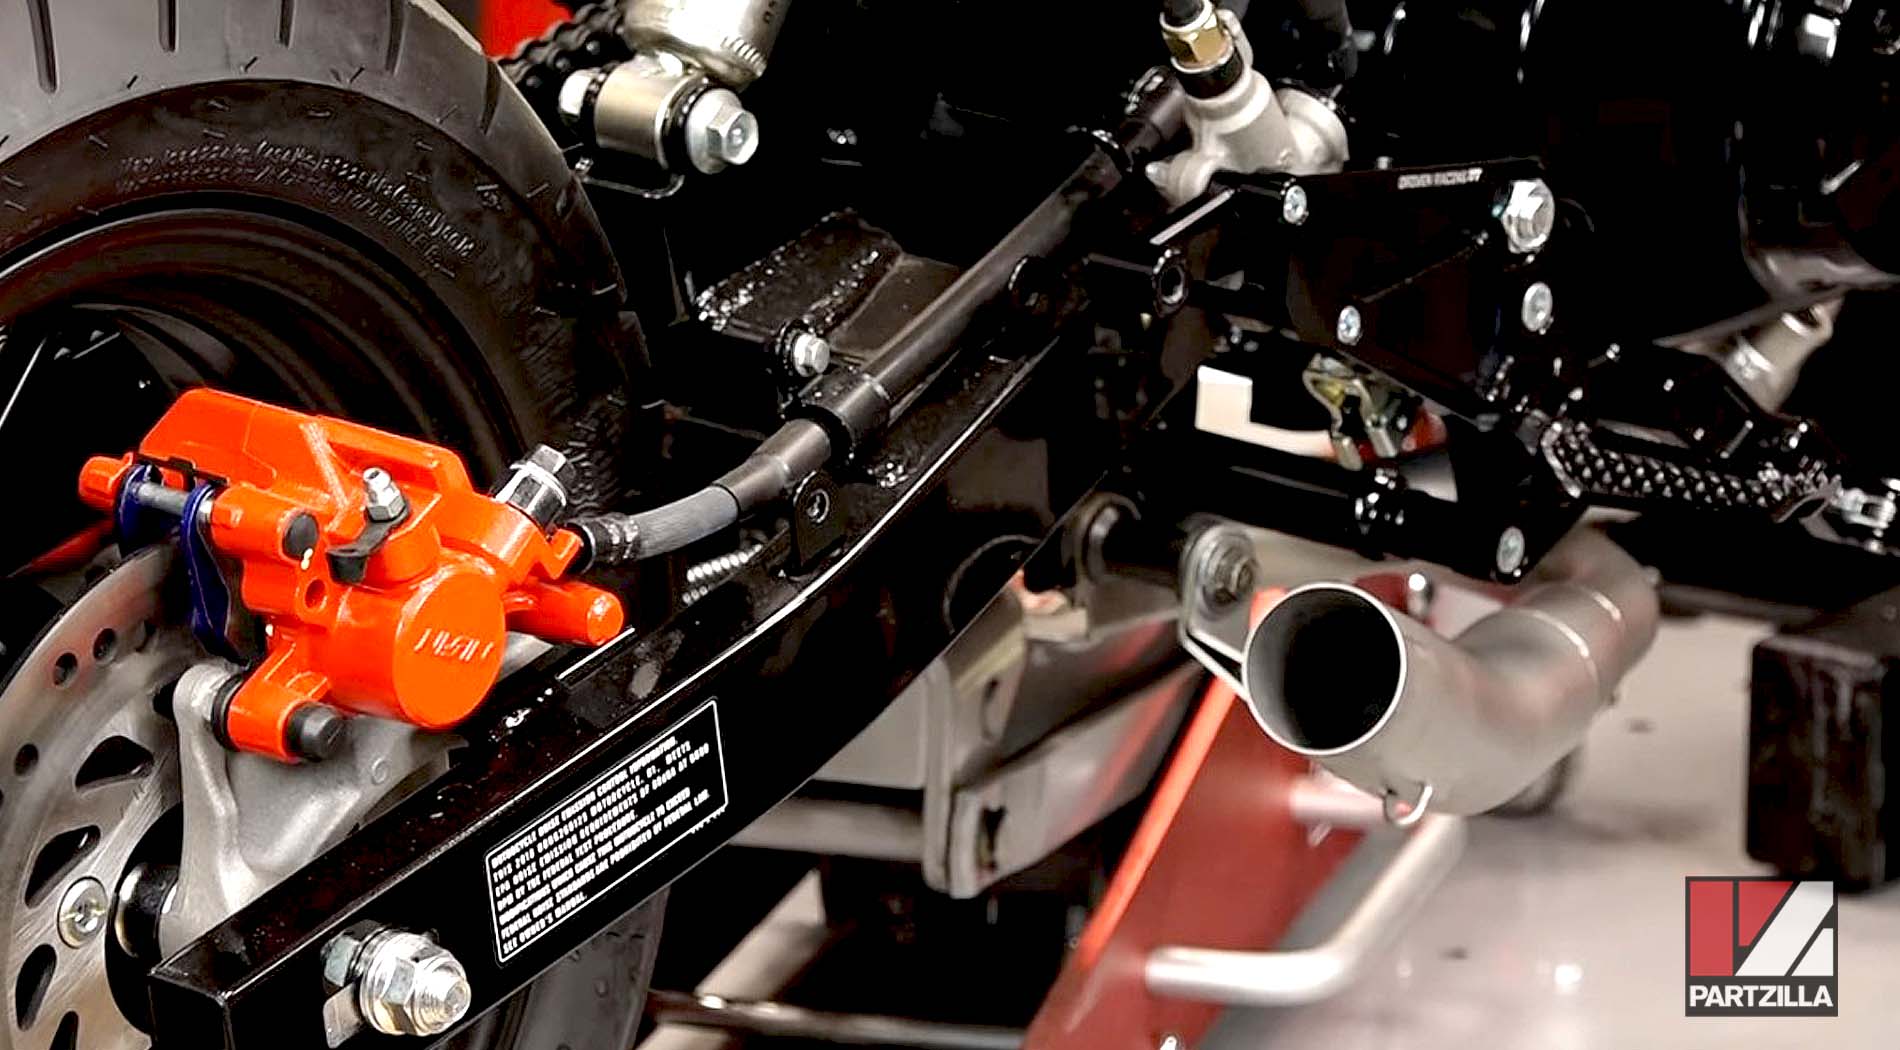 Honda Grom ABS 125 aftermarket suspension upgrades shock absorber removal